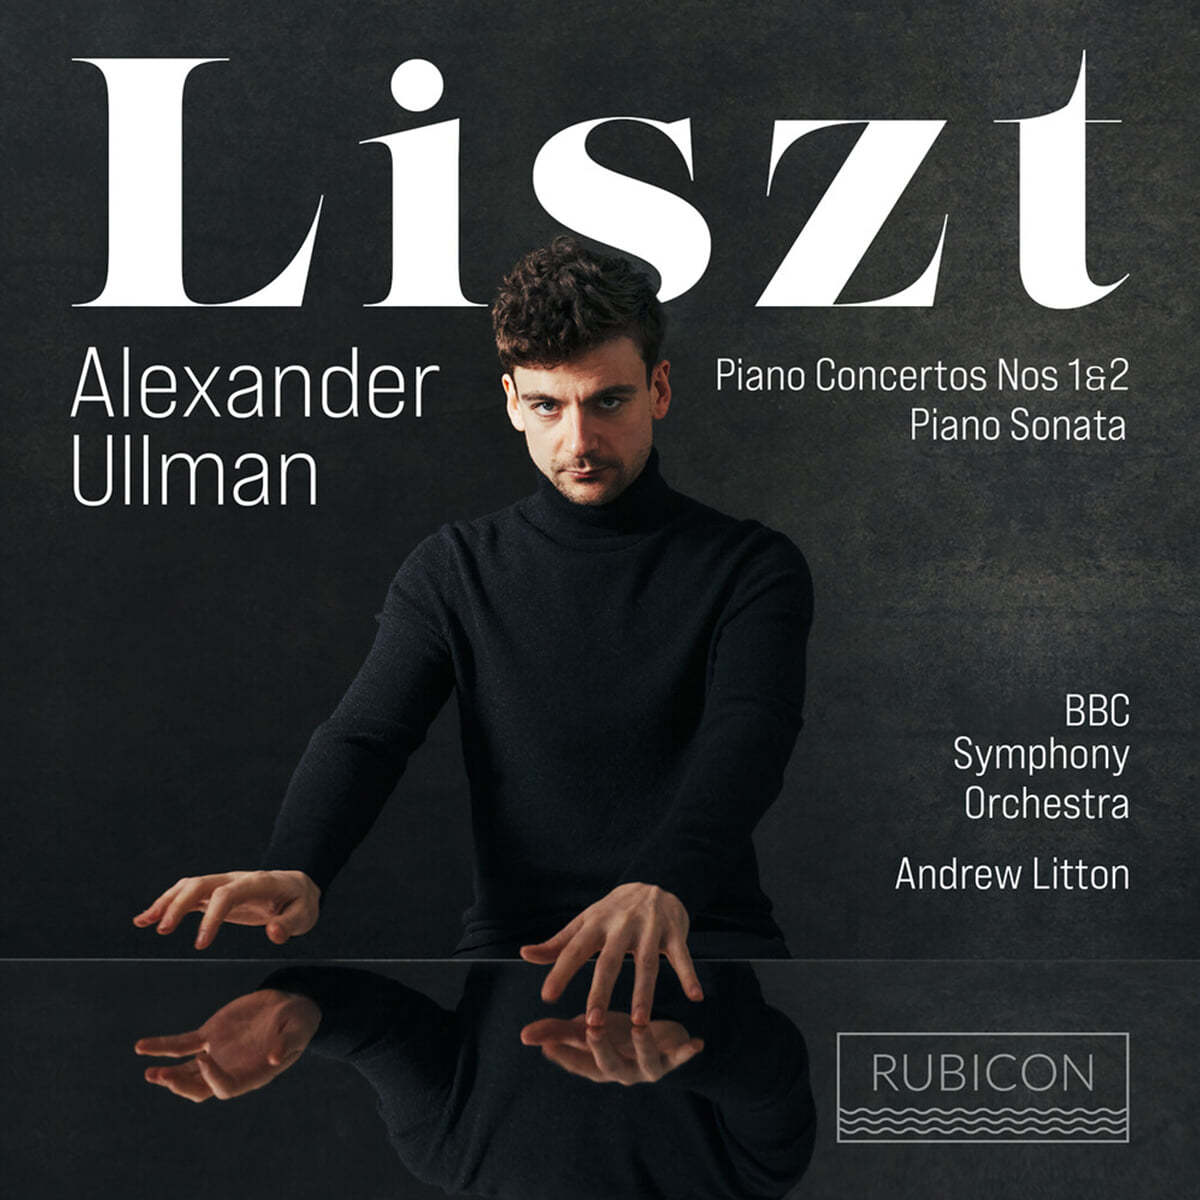 Alexander Ullman 리스트: 피아노 협주곡 1번 2번, 피아노 소나타 (Liszt: Piano Concertos, Sonata S.178 